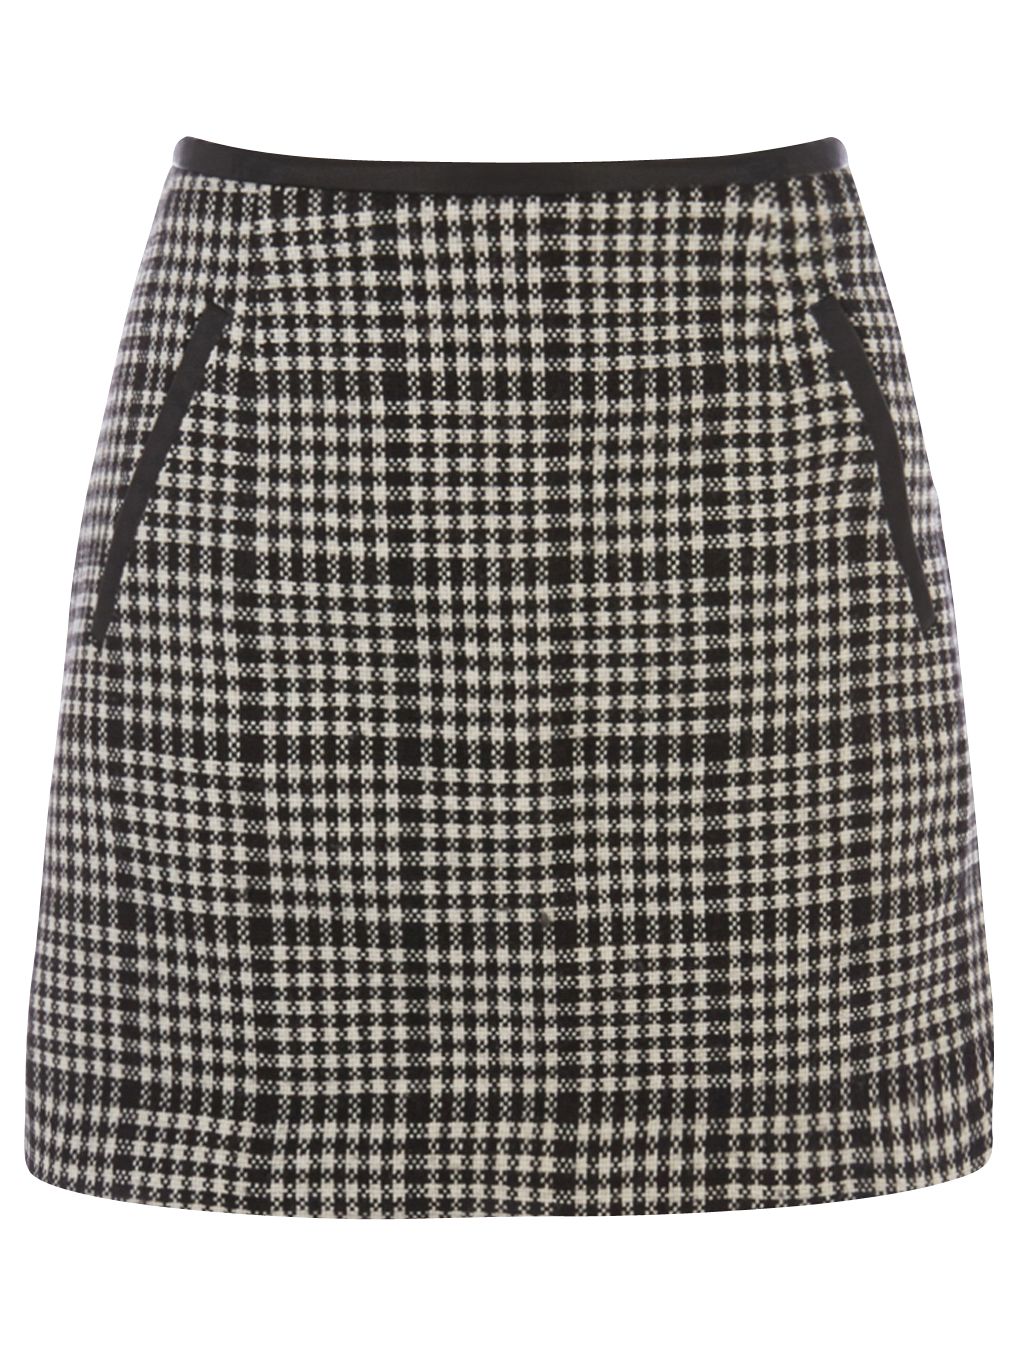 Oasis Mini Checked Marley Skirt, Multi Black at John Lewis & Partners